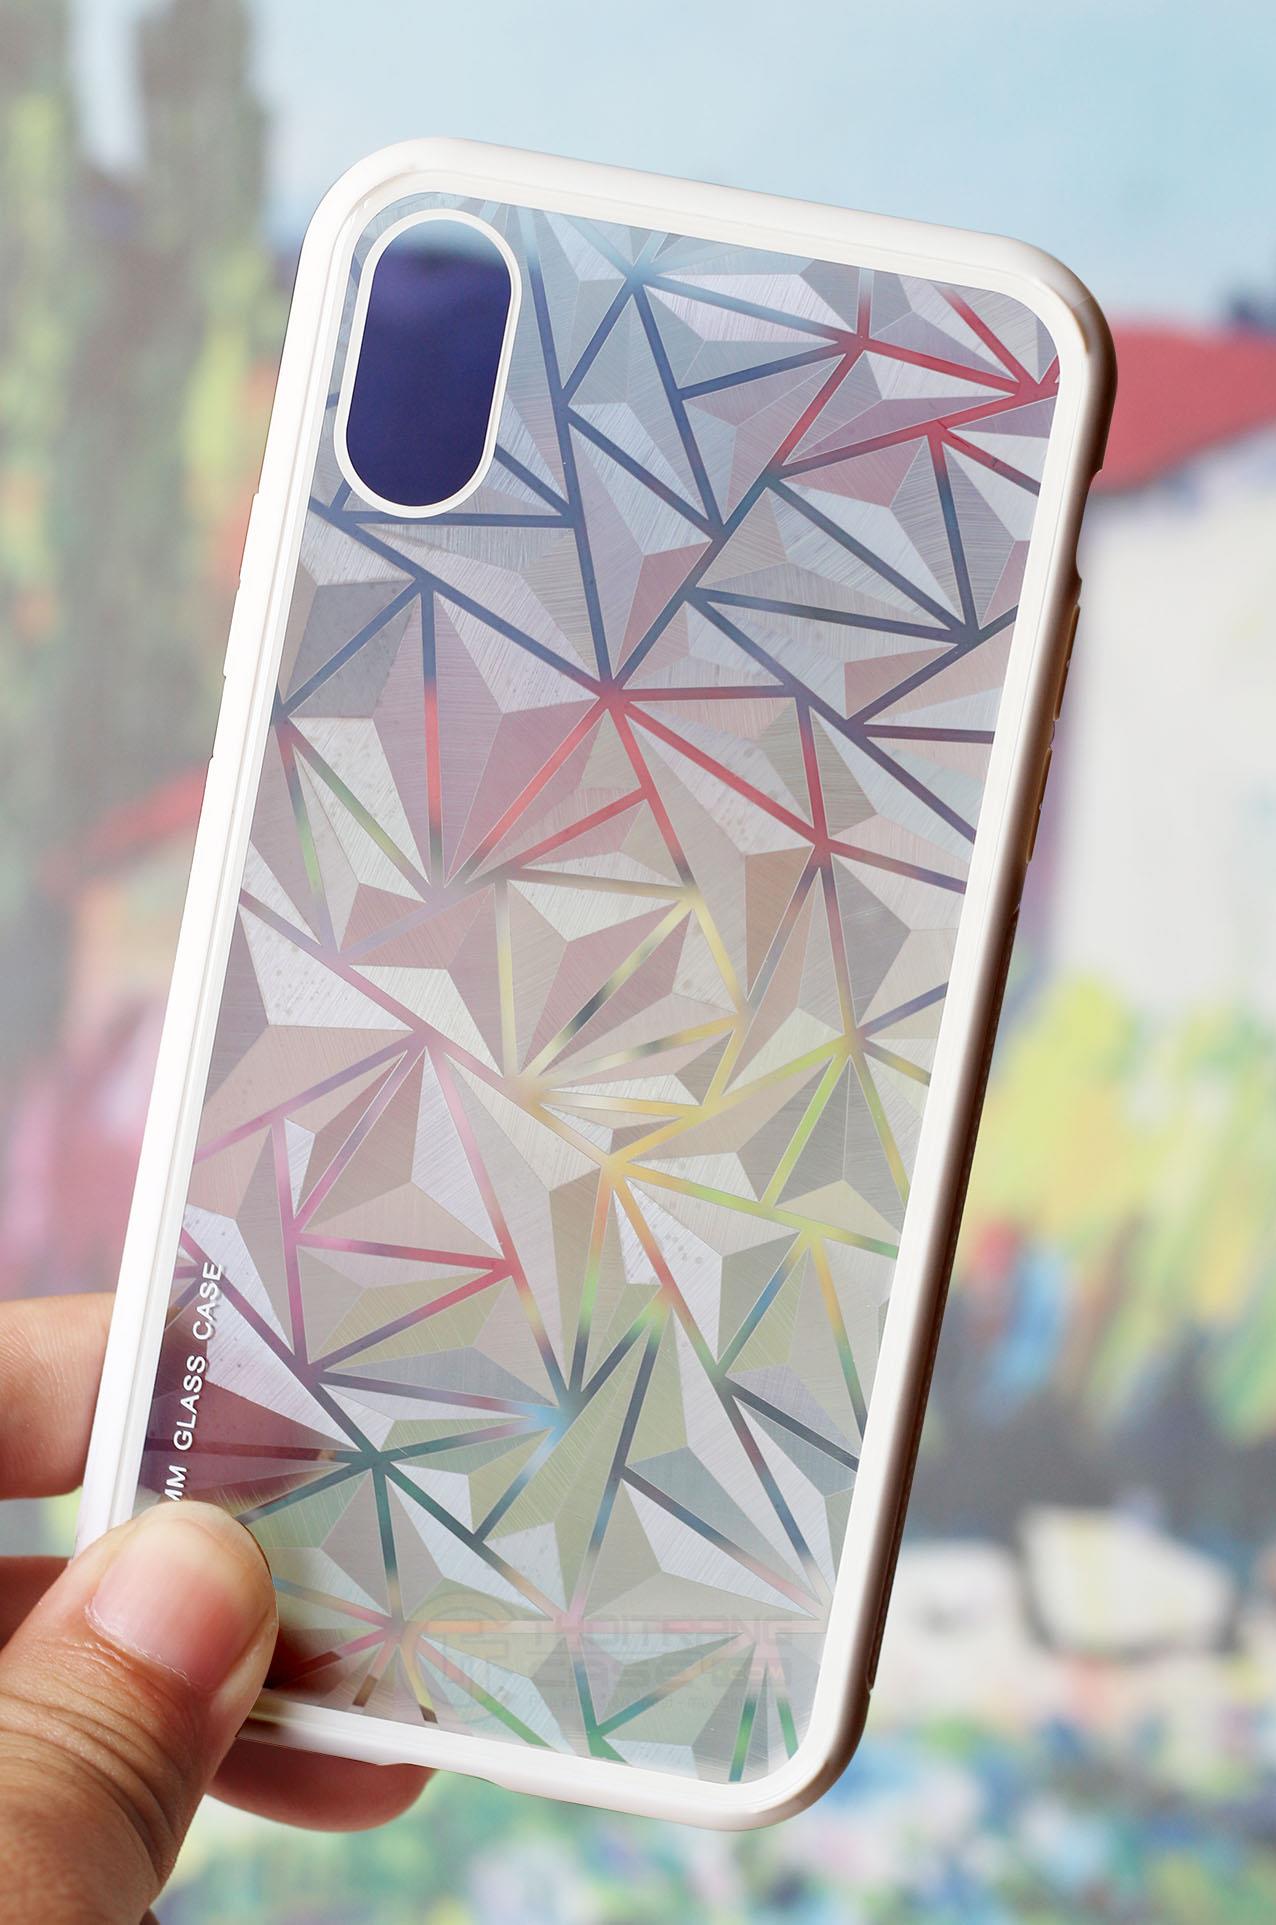 PK Ốp iPhone 6/6s nổi 3D kim cương